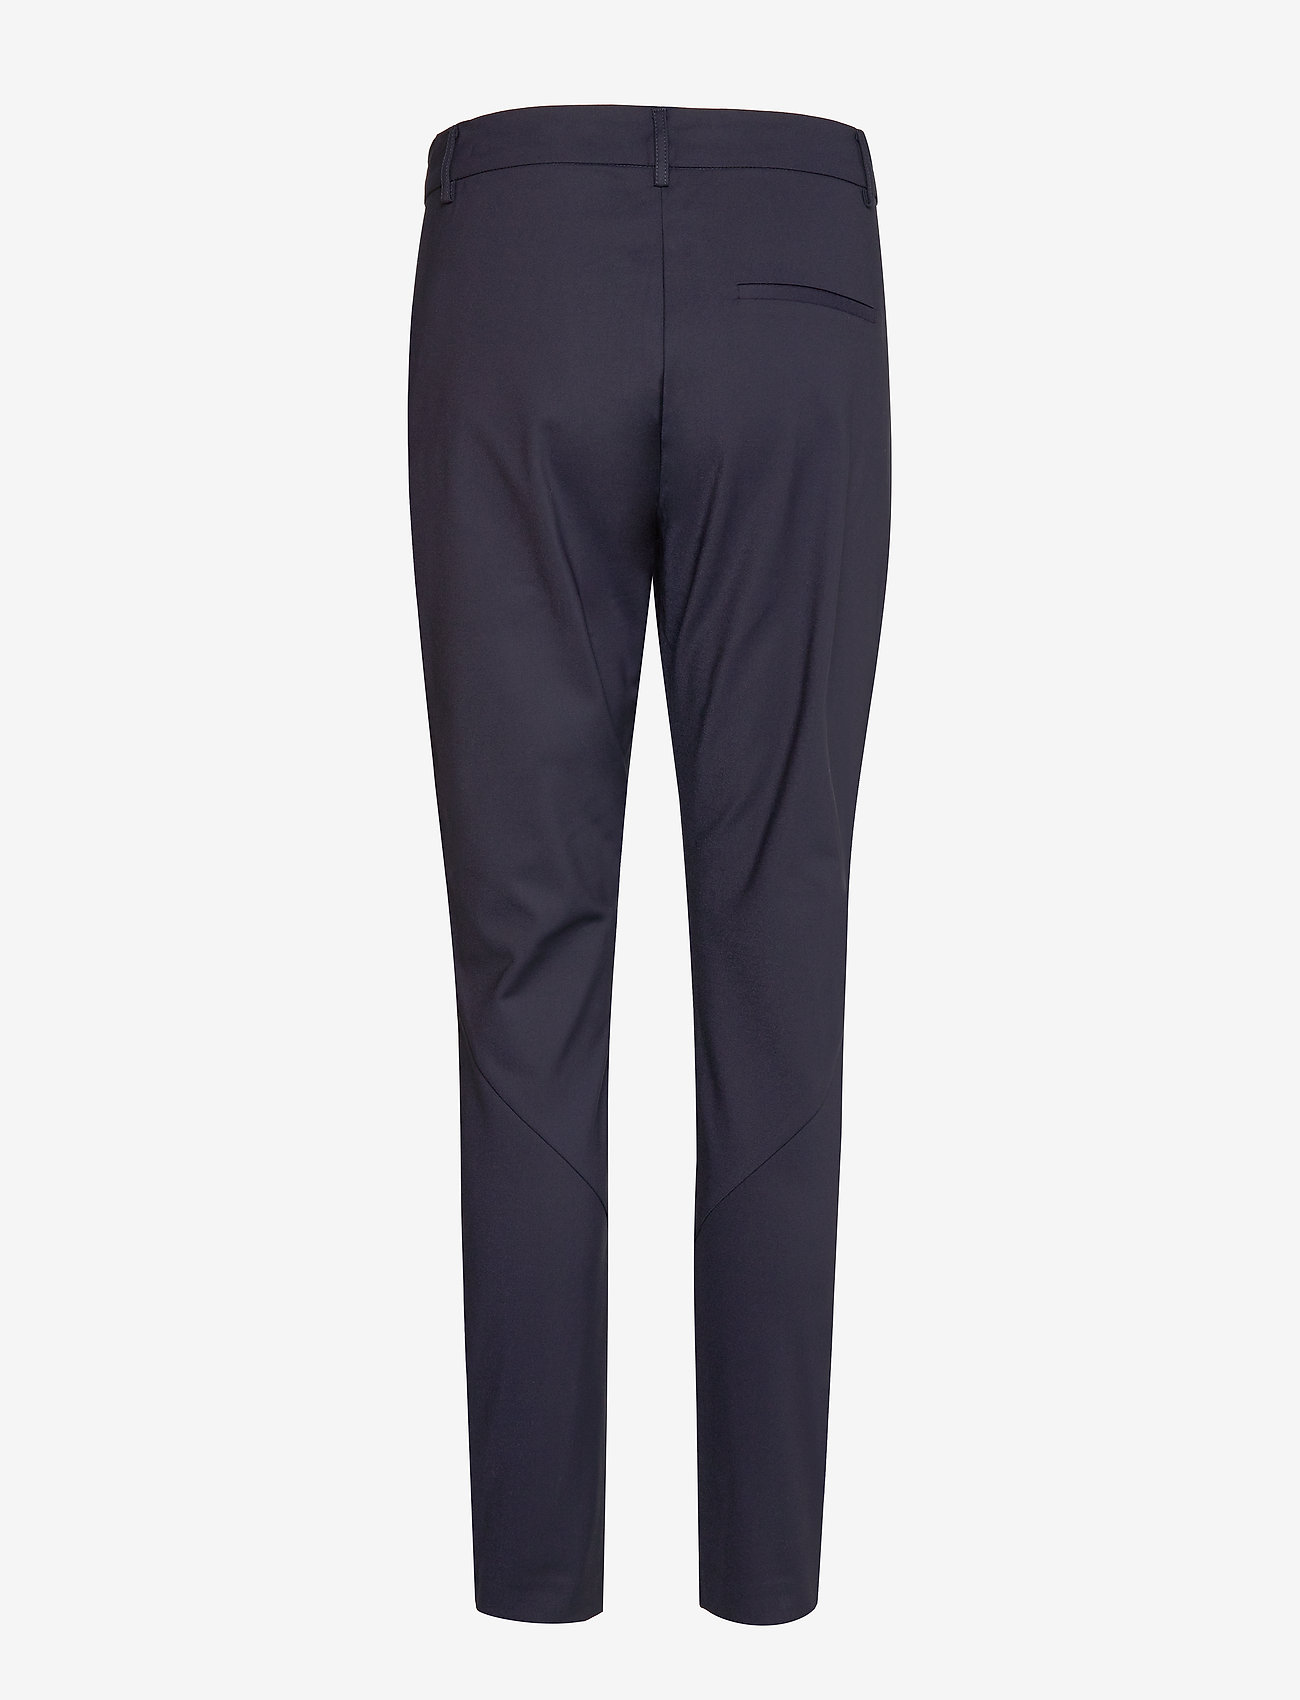 Coster Copenhagen - Classic long pants - Stella - slim fit trousers - night sky blue - 1